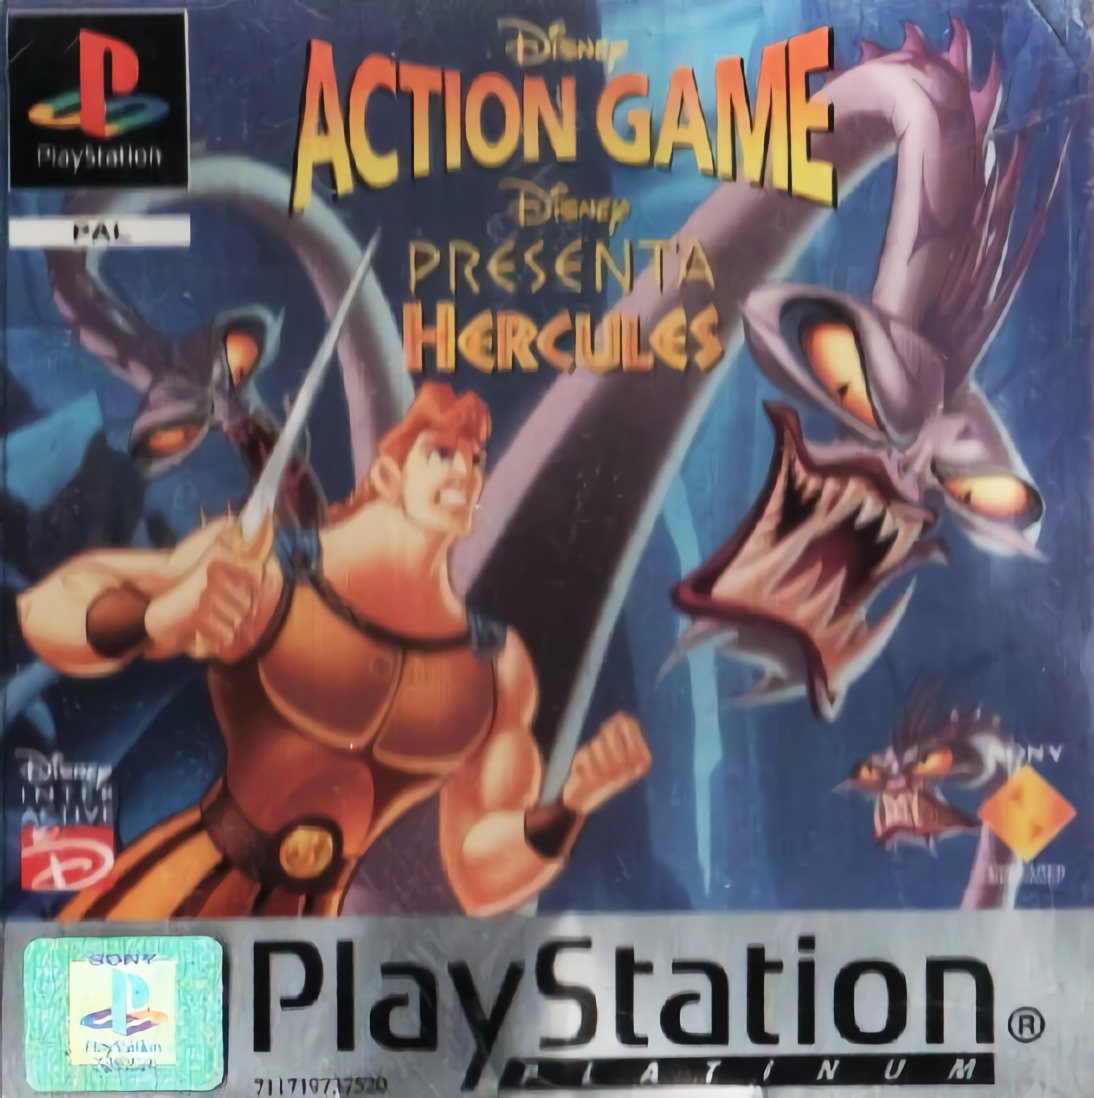 Disney's Hercules: The Action Game